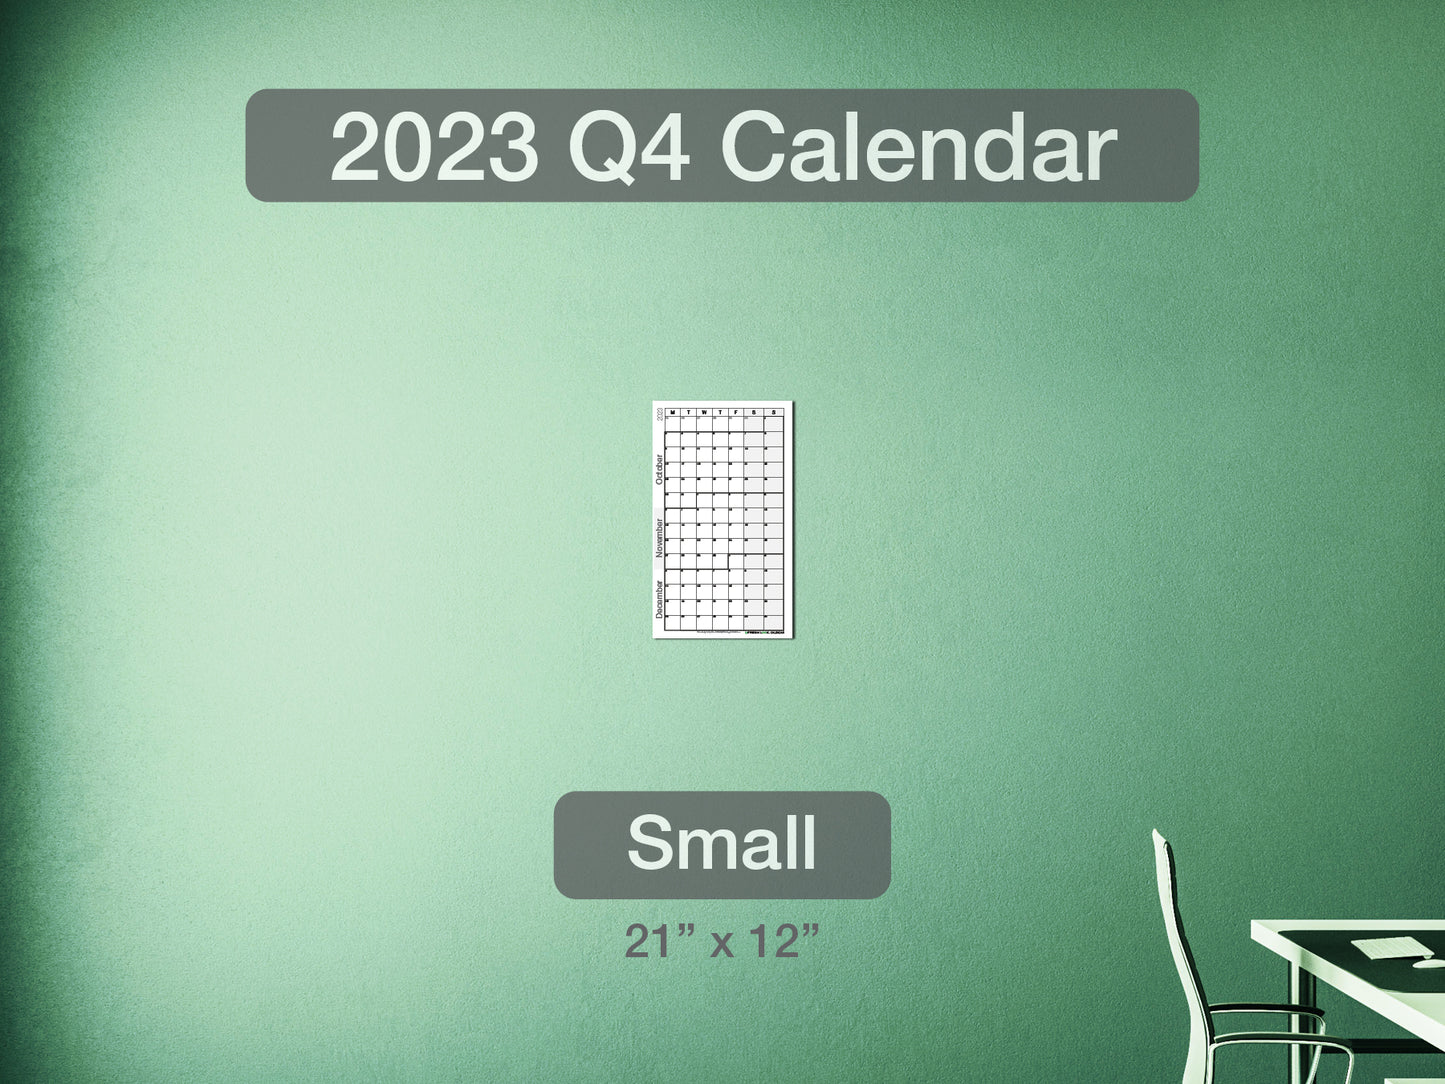 2023 Q4 Calendar Small